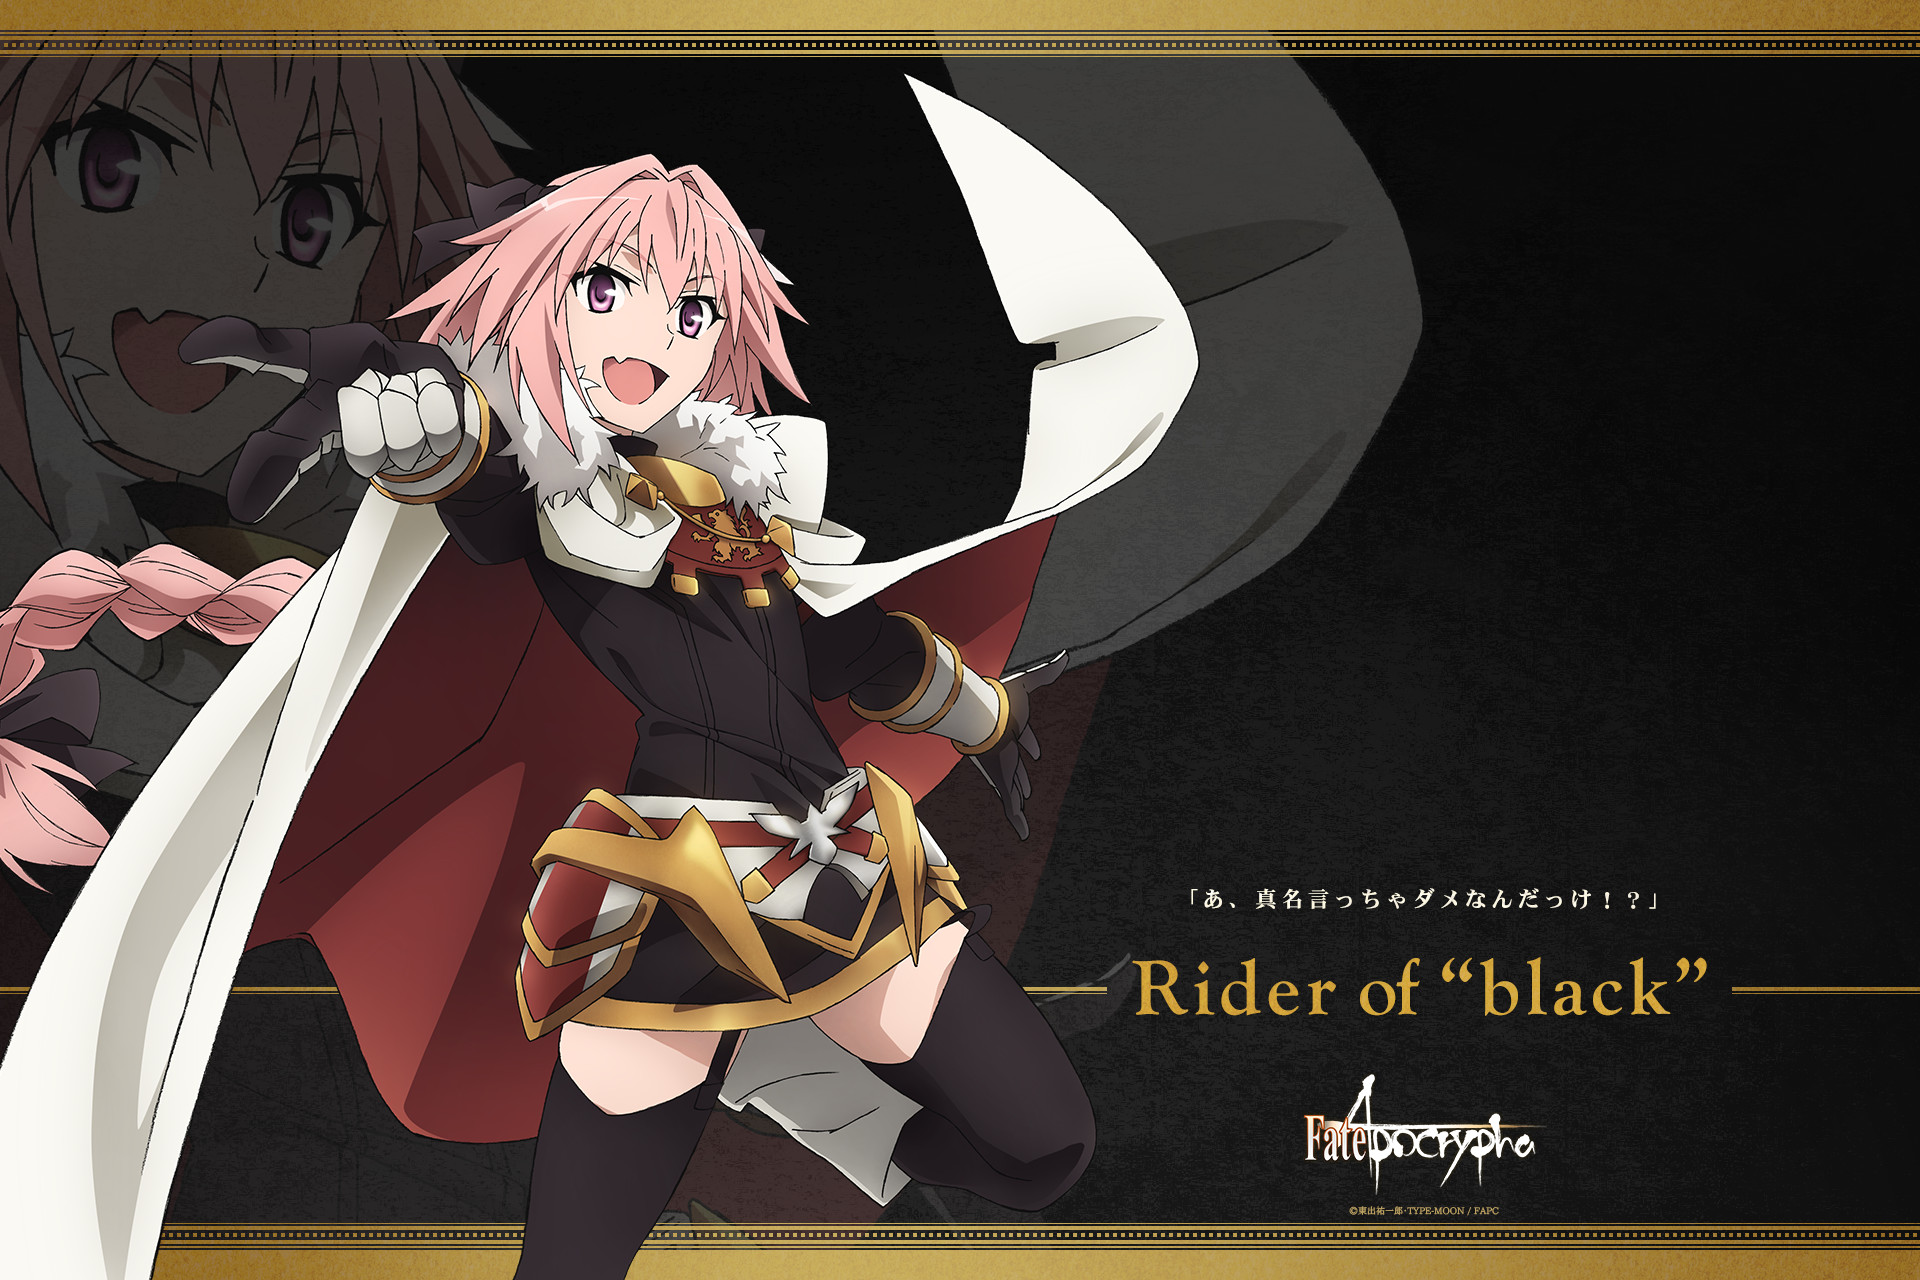 Rider Of Black Fate Apocrypha 1920x1280